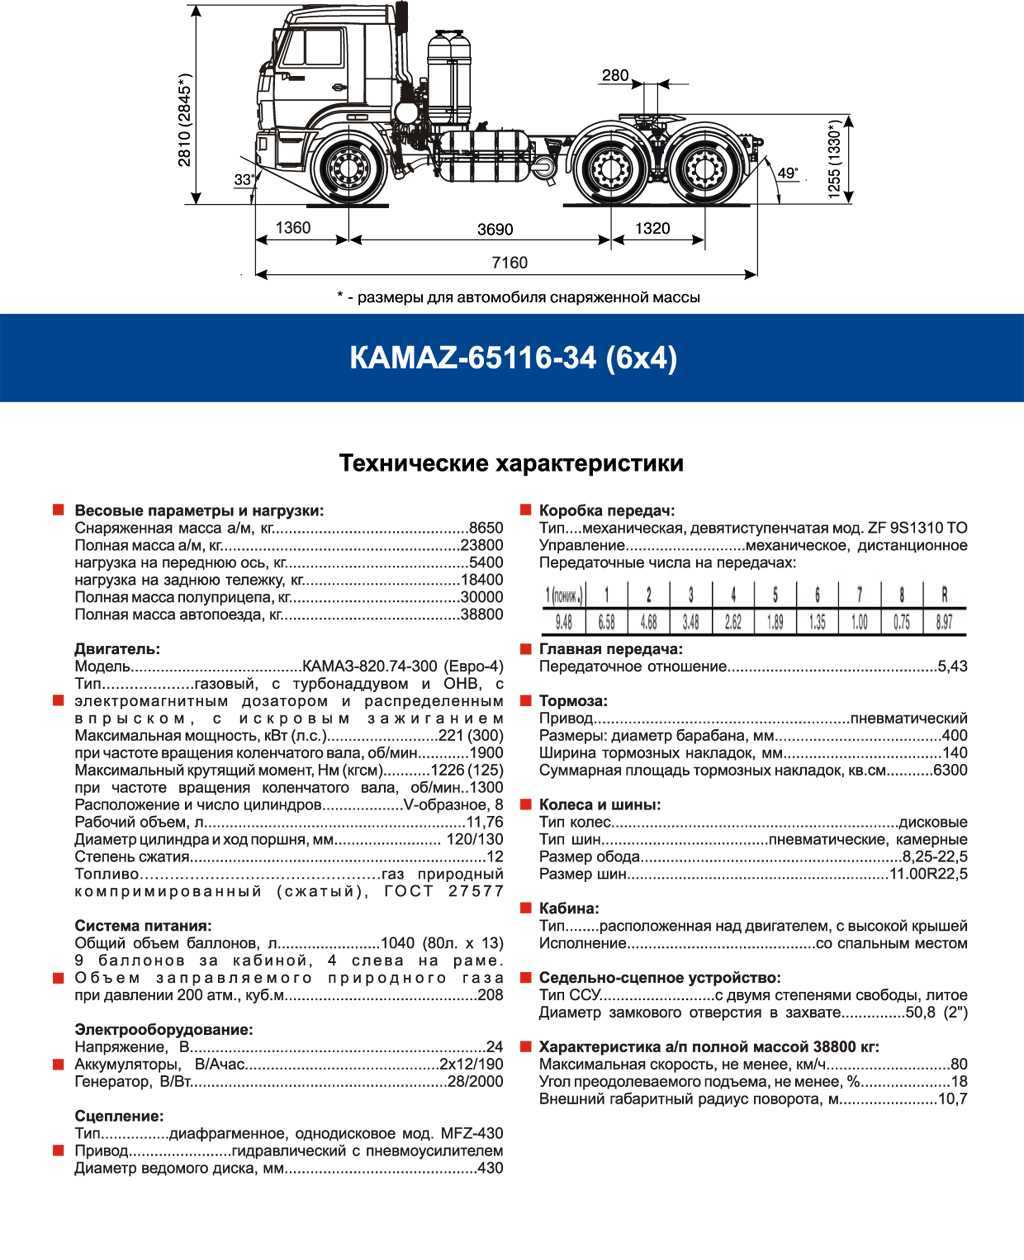 Камаз-5490